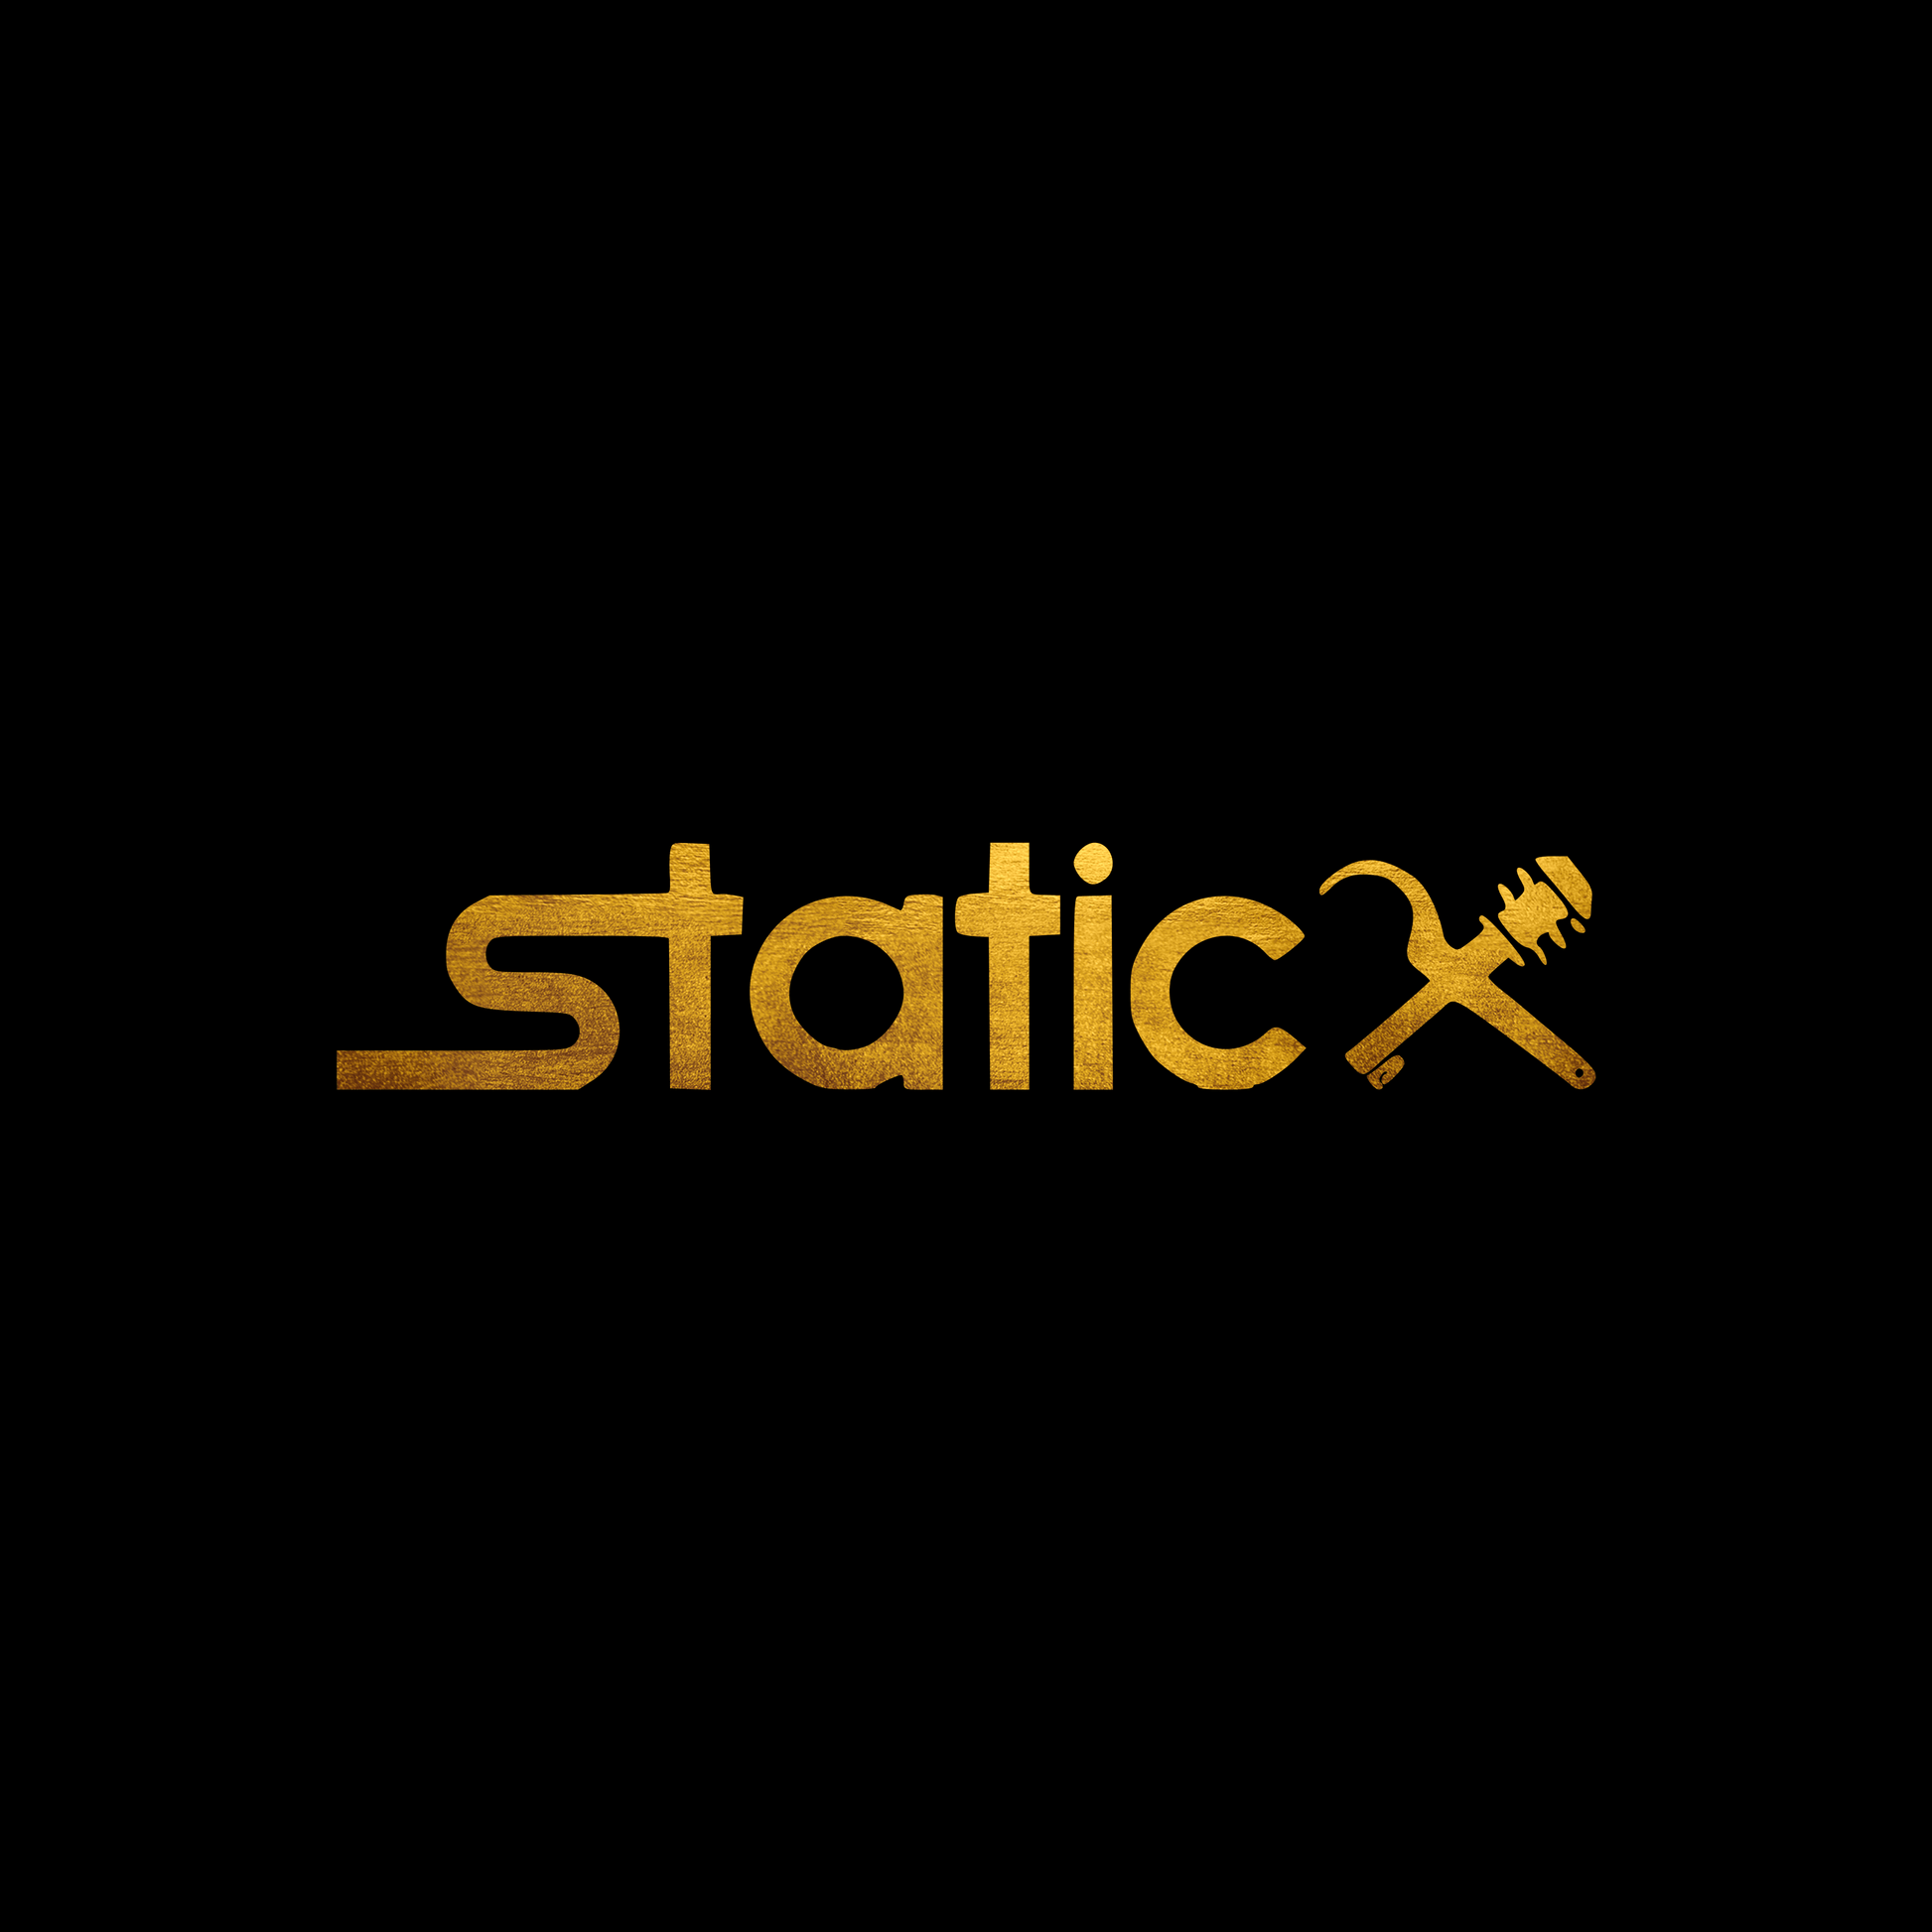 Static 1 sticker decal